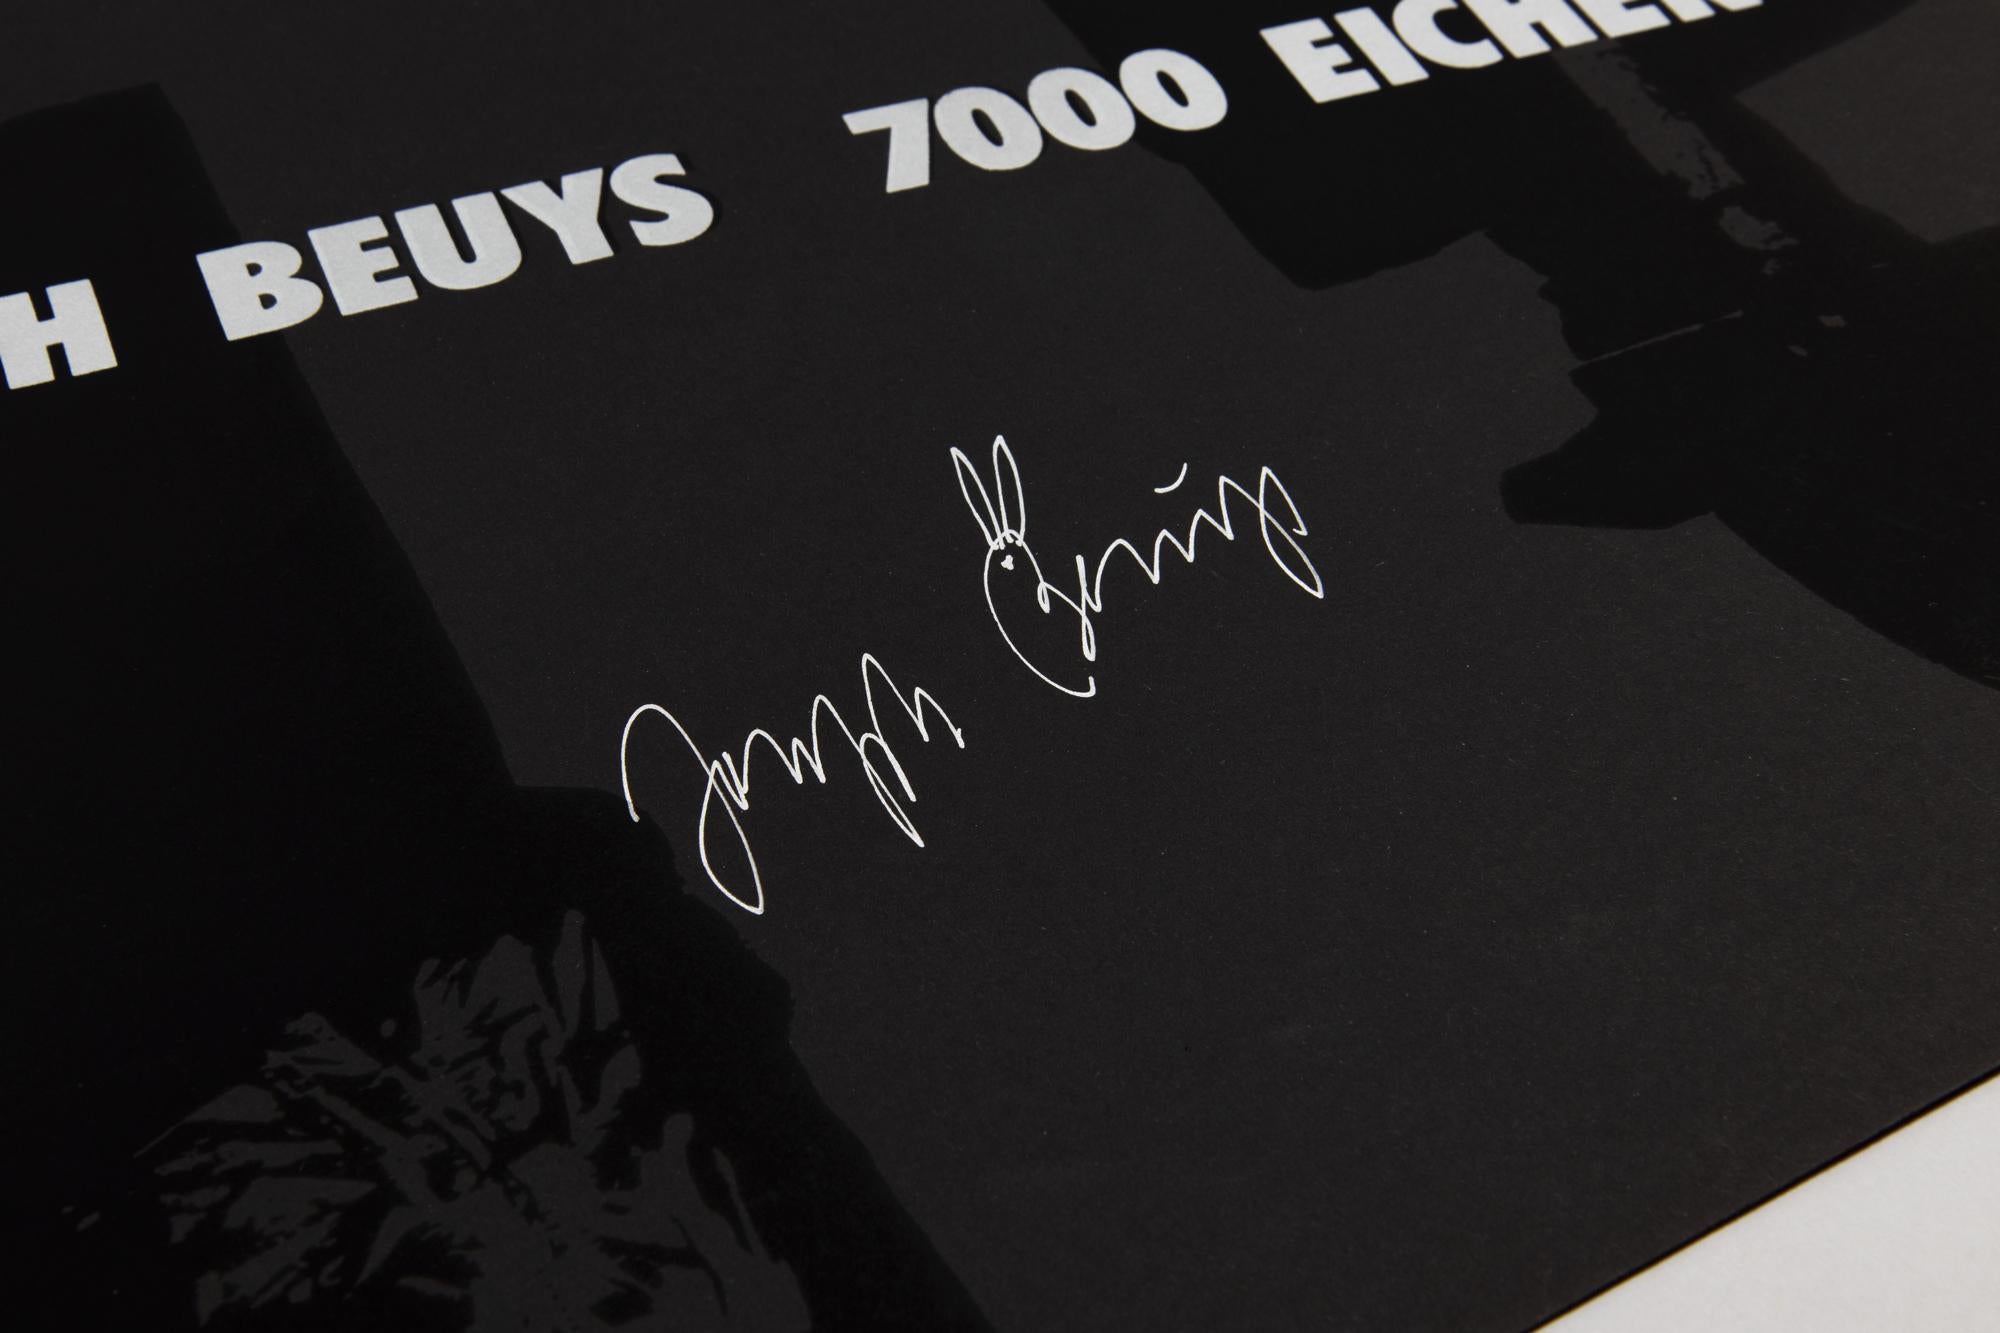 Joseph Beuys, FIU Joseph Beuys, 7000 Eichen - Signed Screenprint from 1982 2